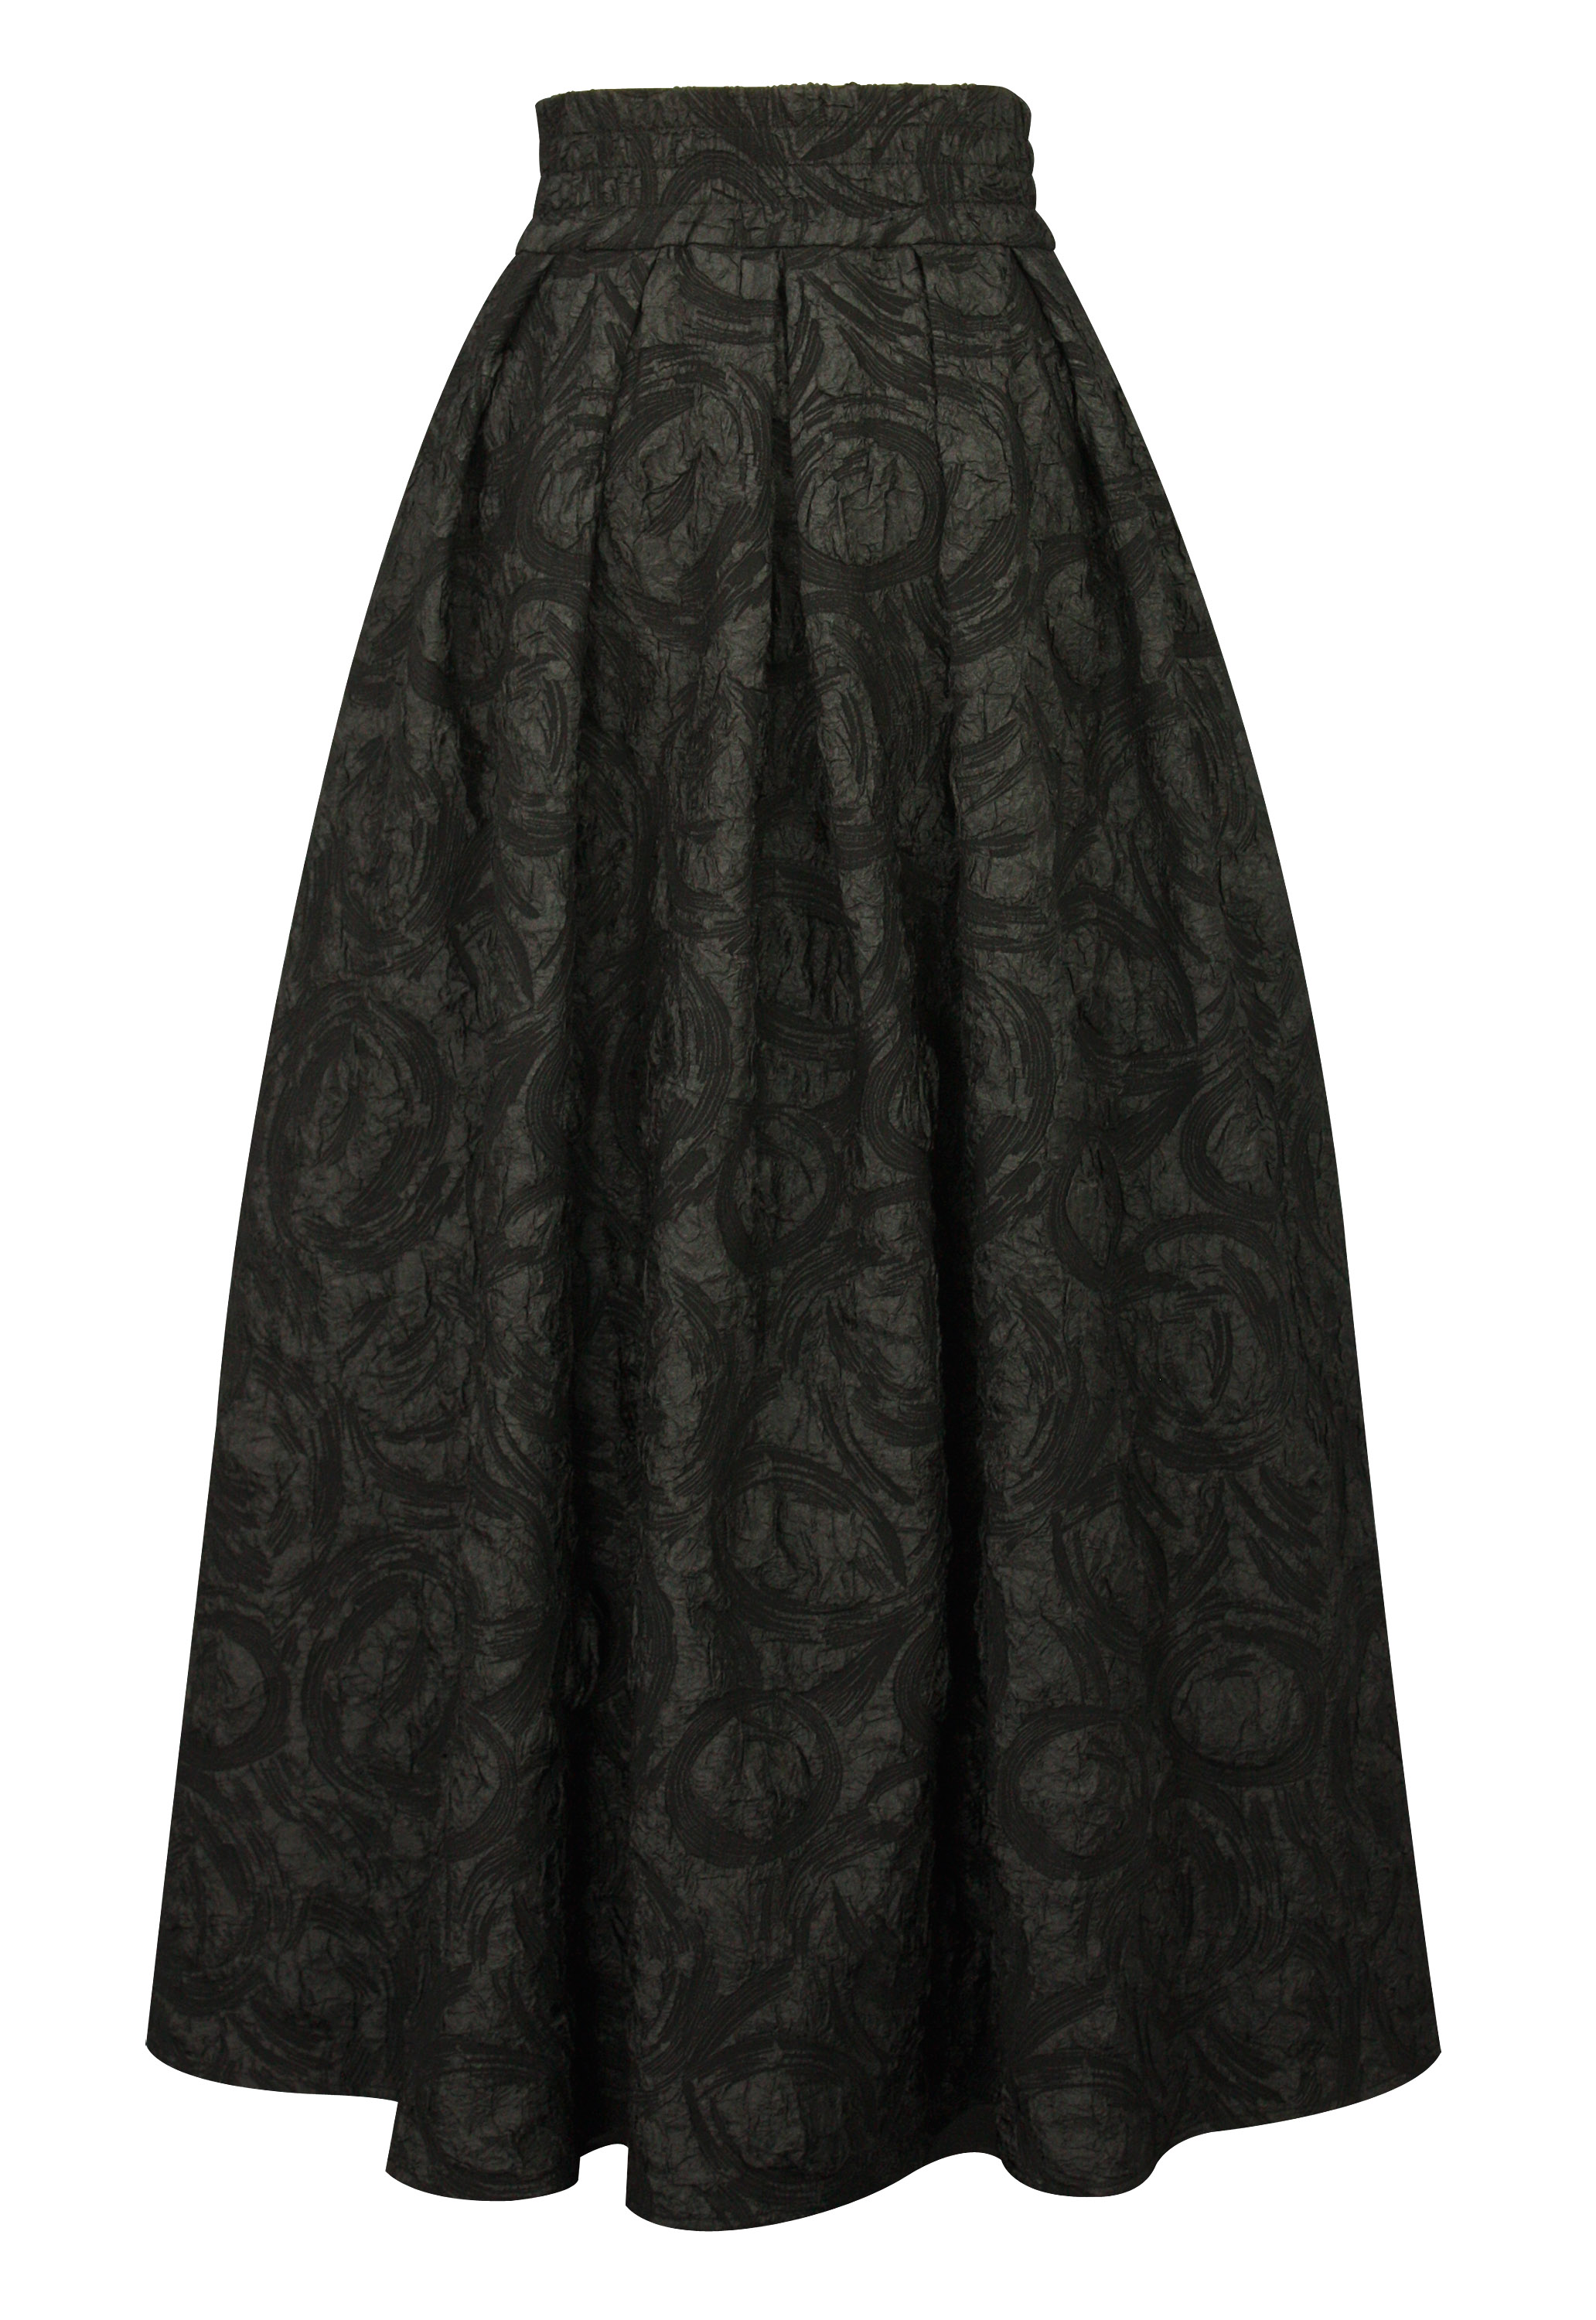 Embossed Texture Skirt